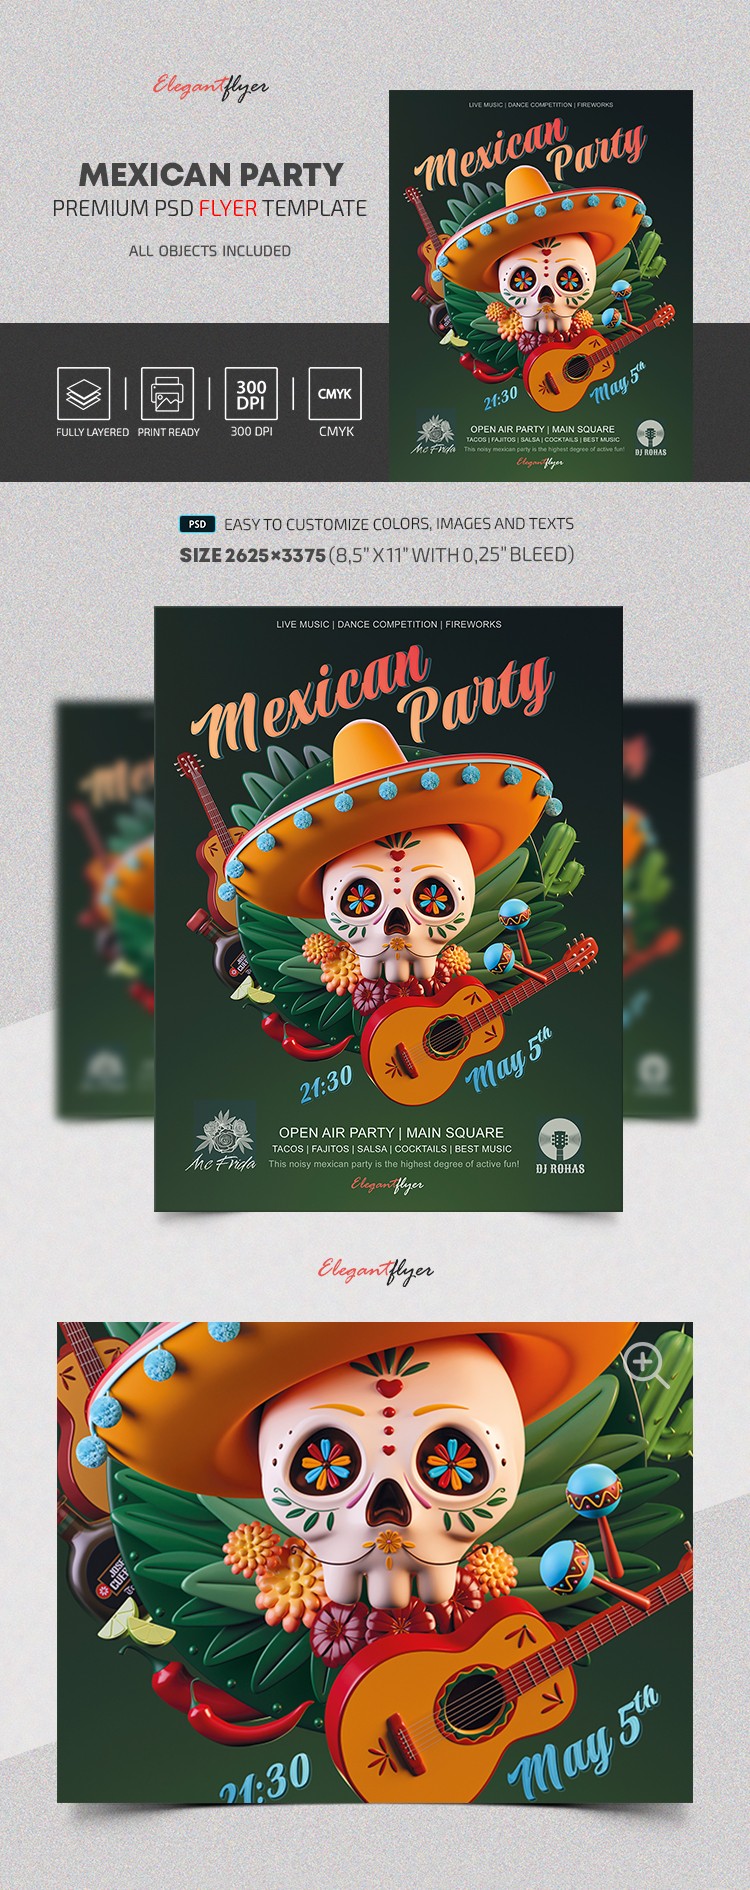 Mexican Party Flyer by ElegantFlyer